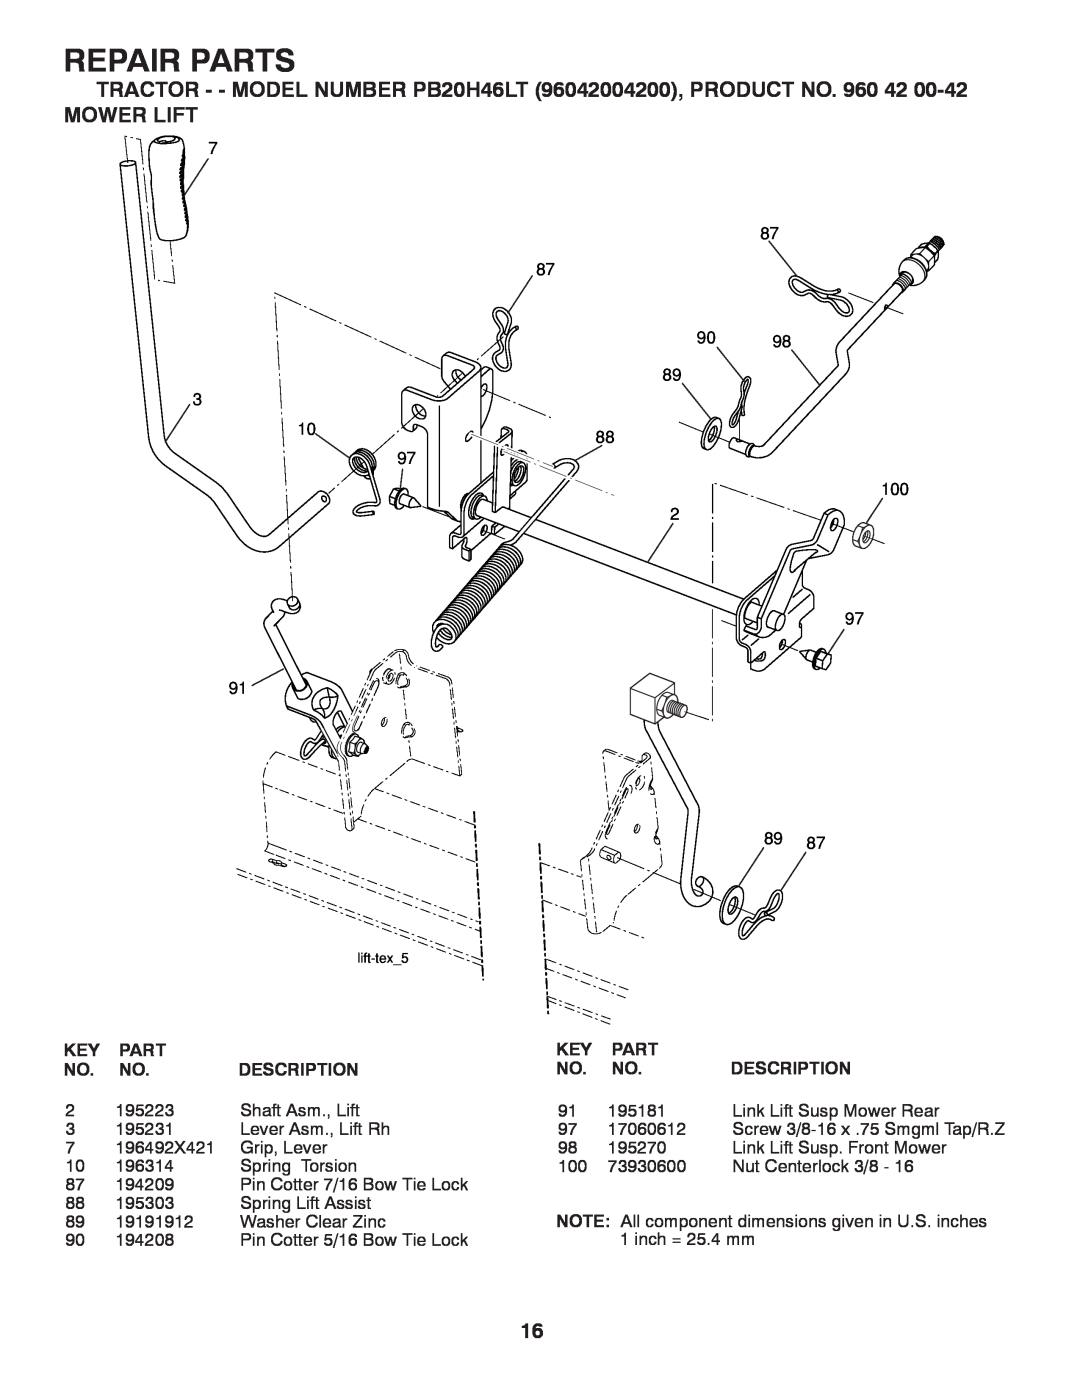 Poulan manual Mower Lift, Repair Parts, TRACTOR - - MODEL NUMBER PB20H46LT 96042004200, PRODUCT NO. 960, Description 